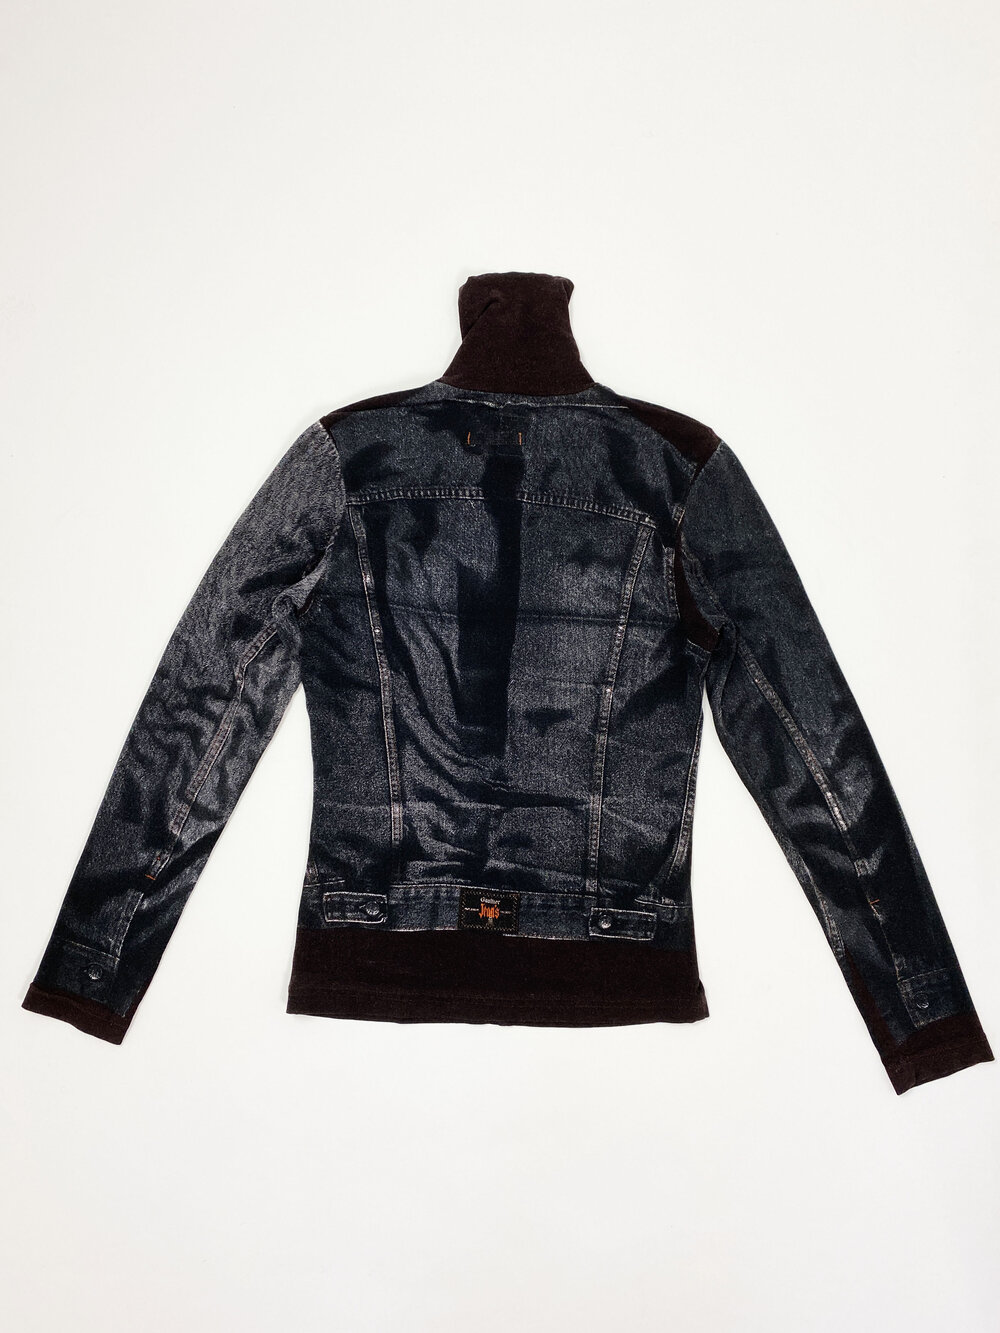 Jean Paul Gaultier trompe l'oeil jacket print knit top — JAMES VELORIA